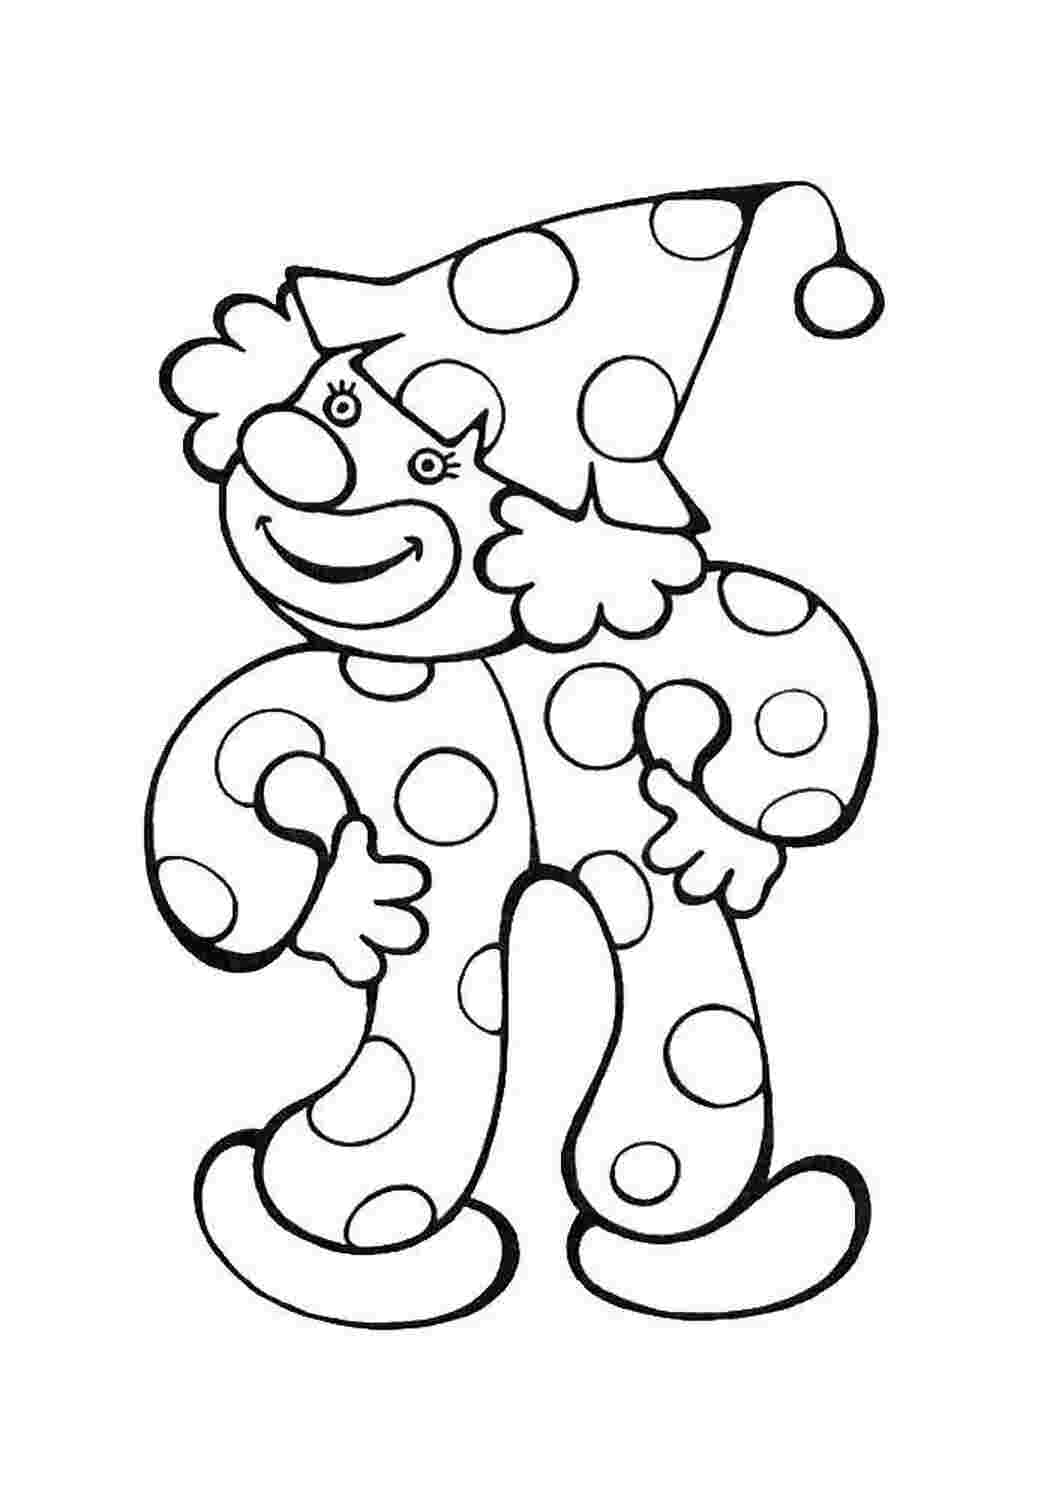 Клоун раскраска для детей 4 5 лет. Клоун раскраска. Веселый клоун раскраска. Клоун раскраска для детей. Раскраска весёлый клоун для детей.